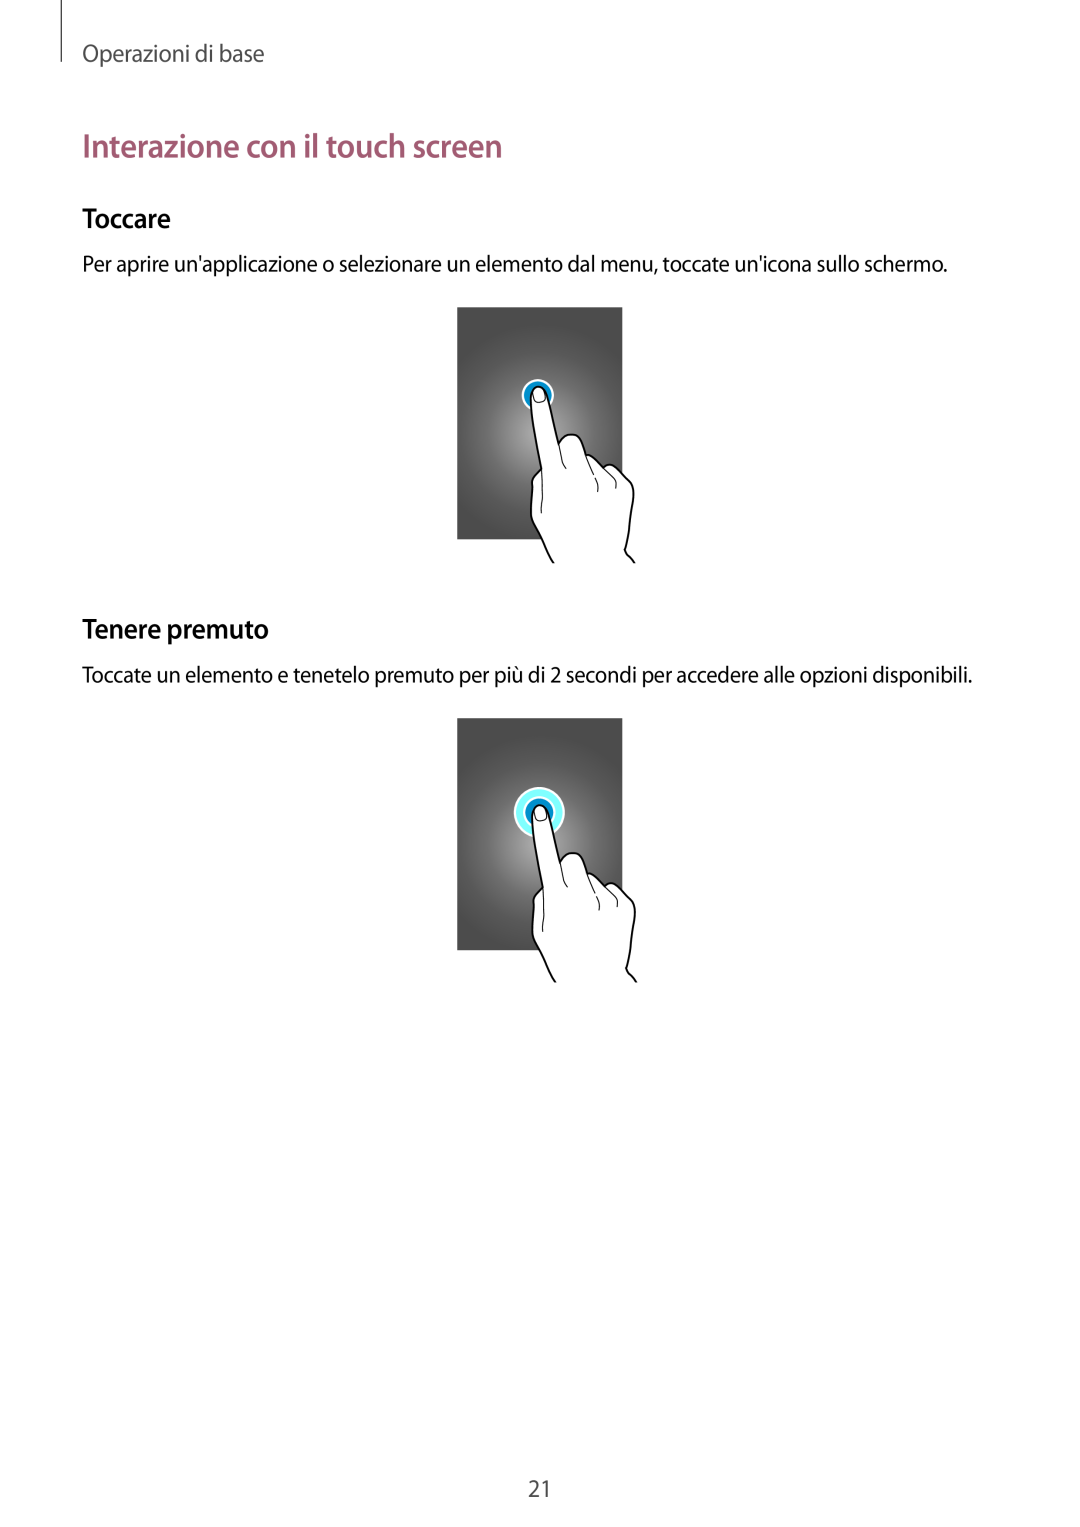 Samsung GT-N7100RWDHUI, GT-N7100ZRDTUR manual Interazione con il touch screen, Toccare, Tenere premuto, Operazioni di base 